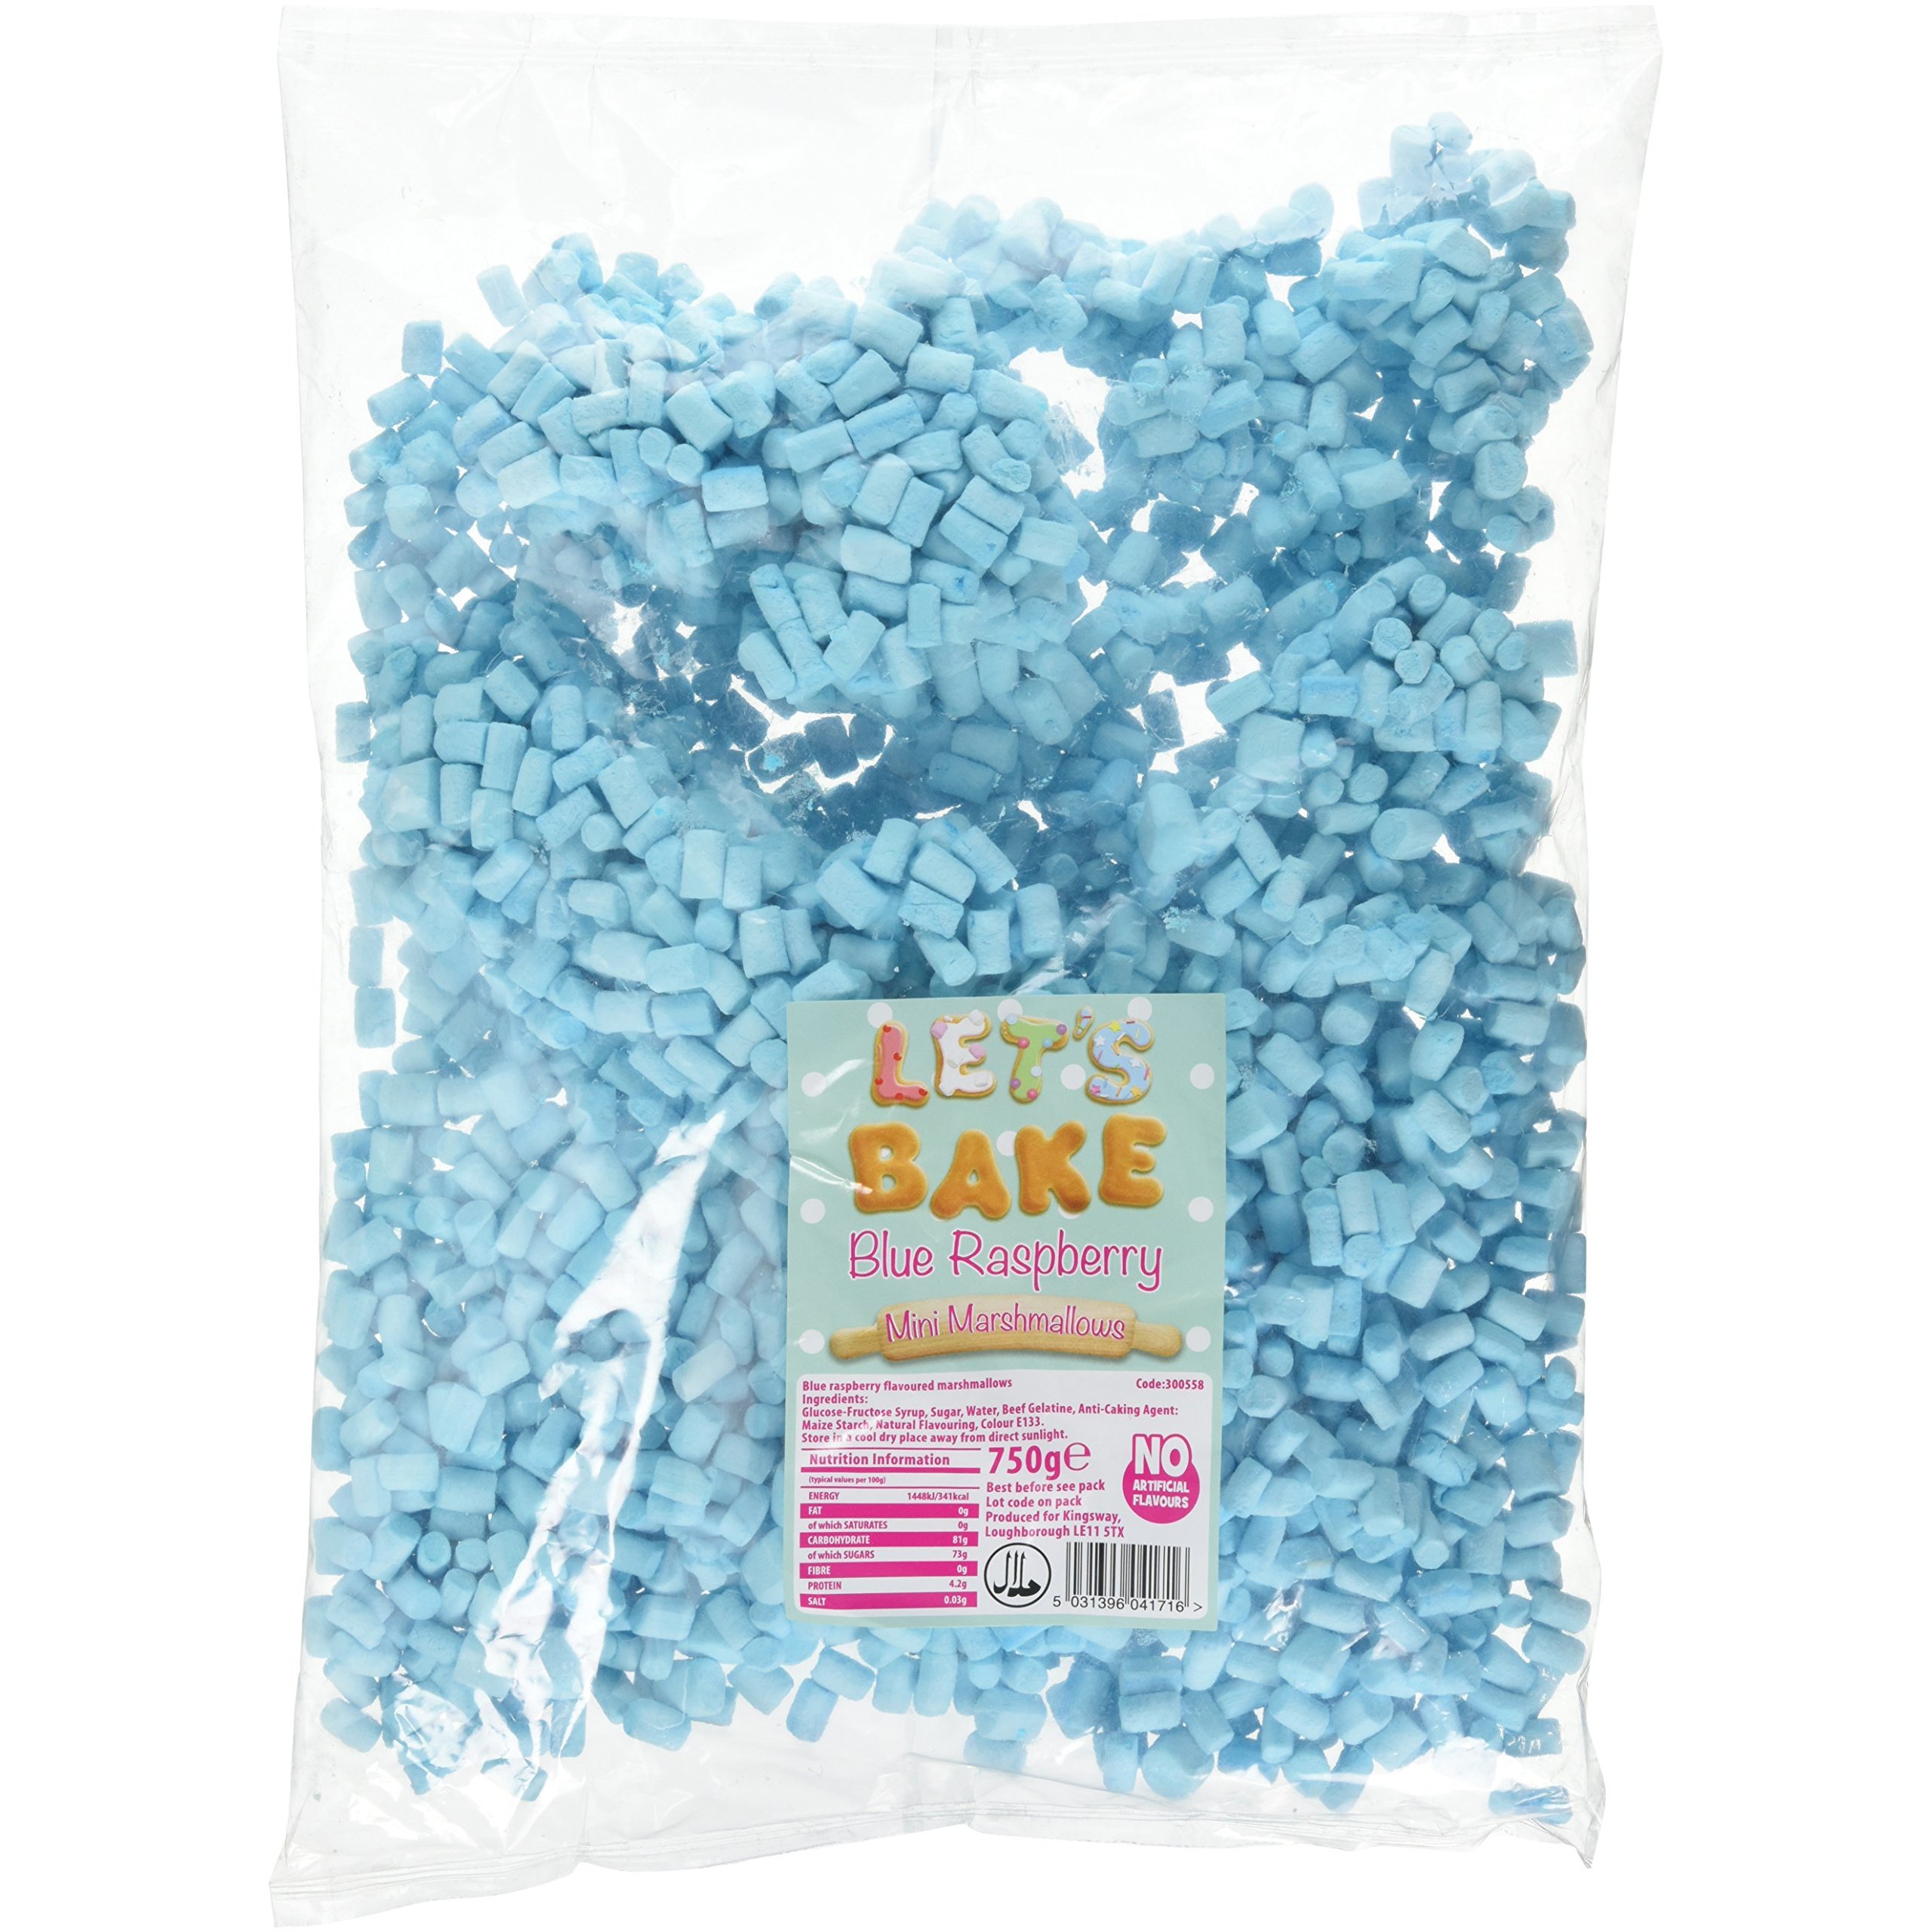 Let's Bake Mini Marshmallows - Blue Raspberry - 750g